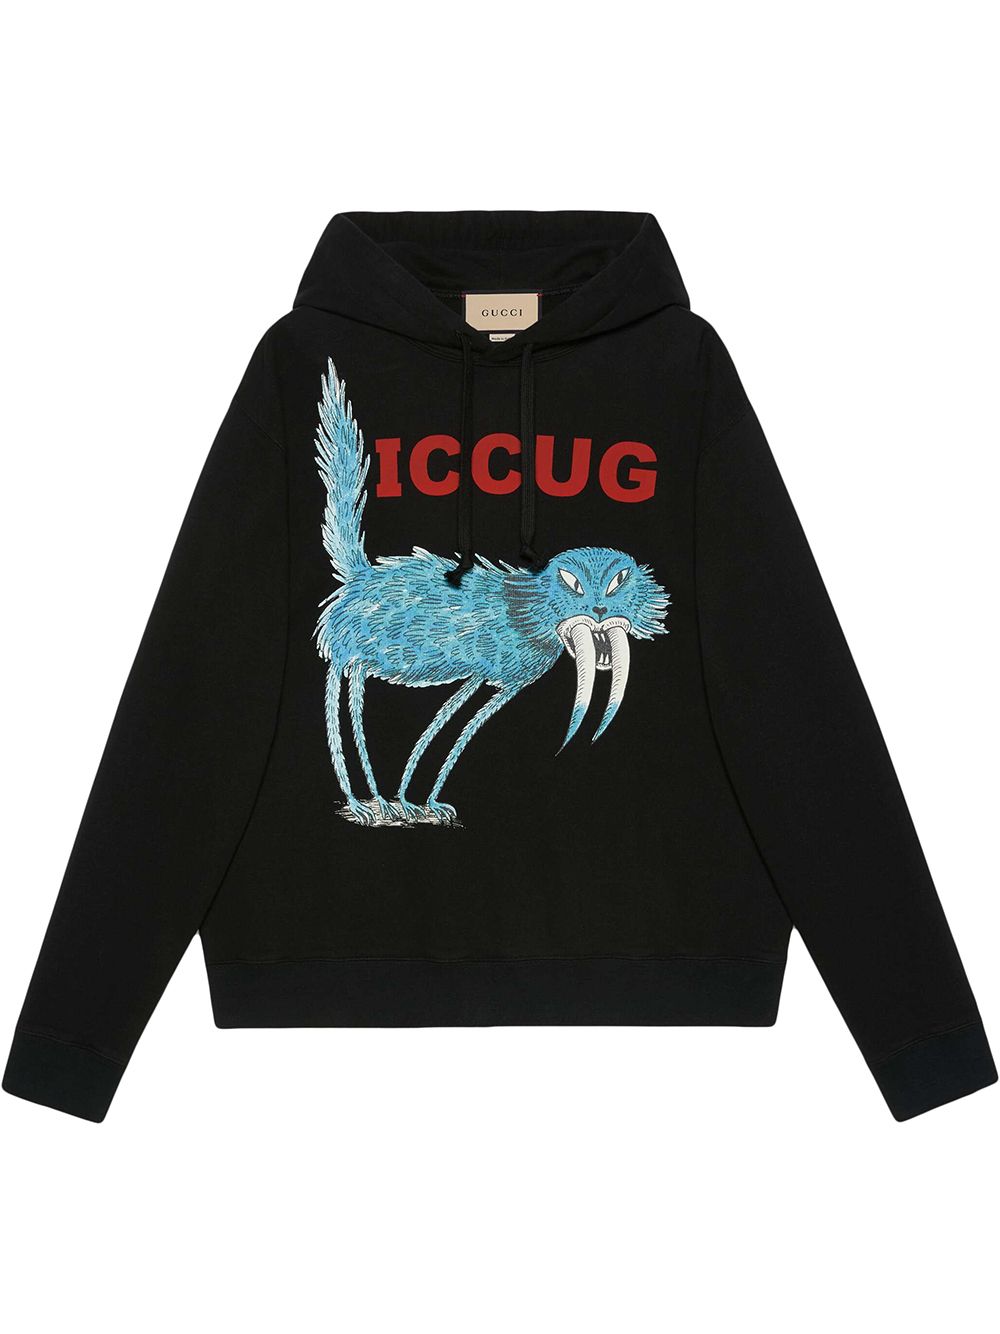 Gucci x Freya Hartas ICCUG hoodie - Black von Gucci